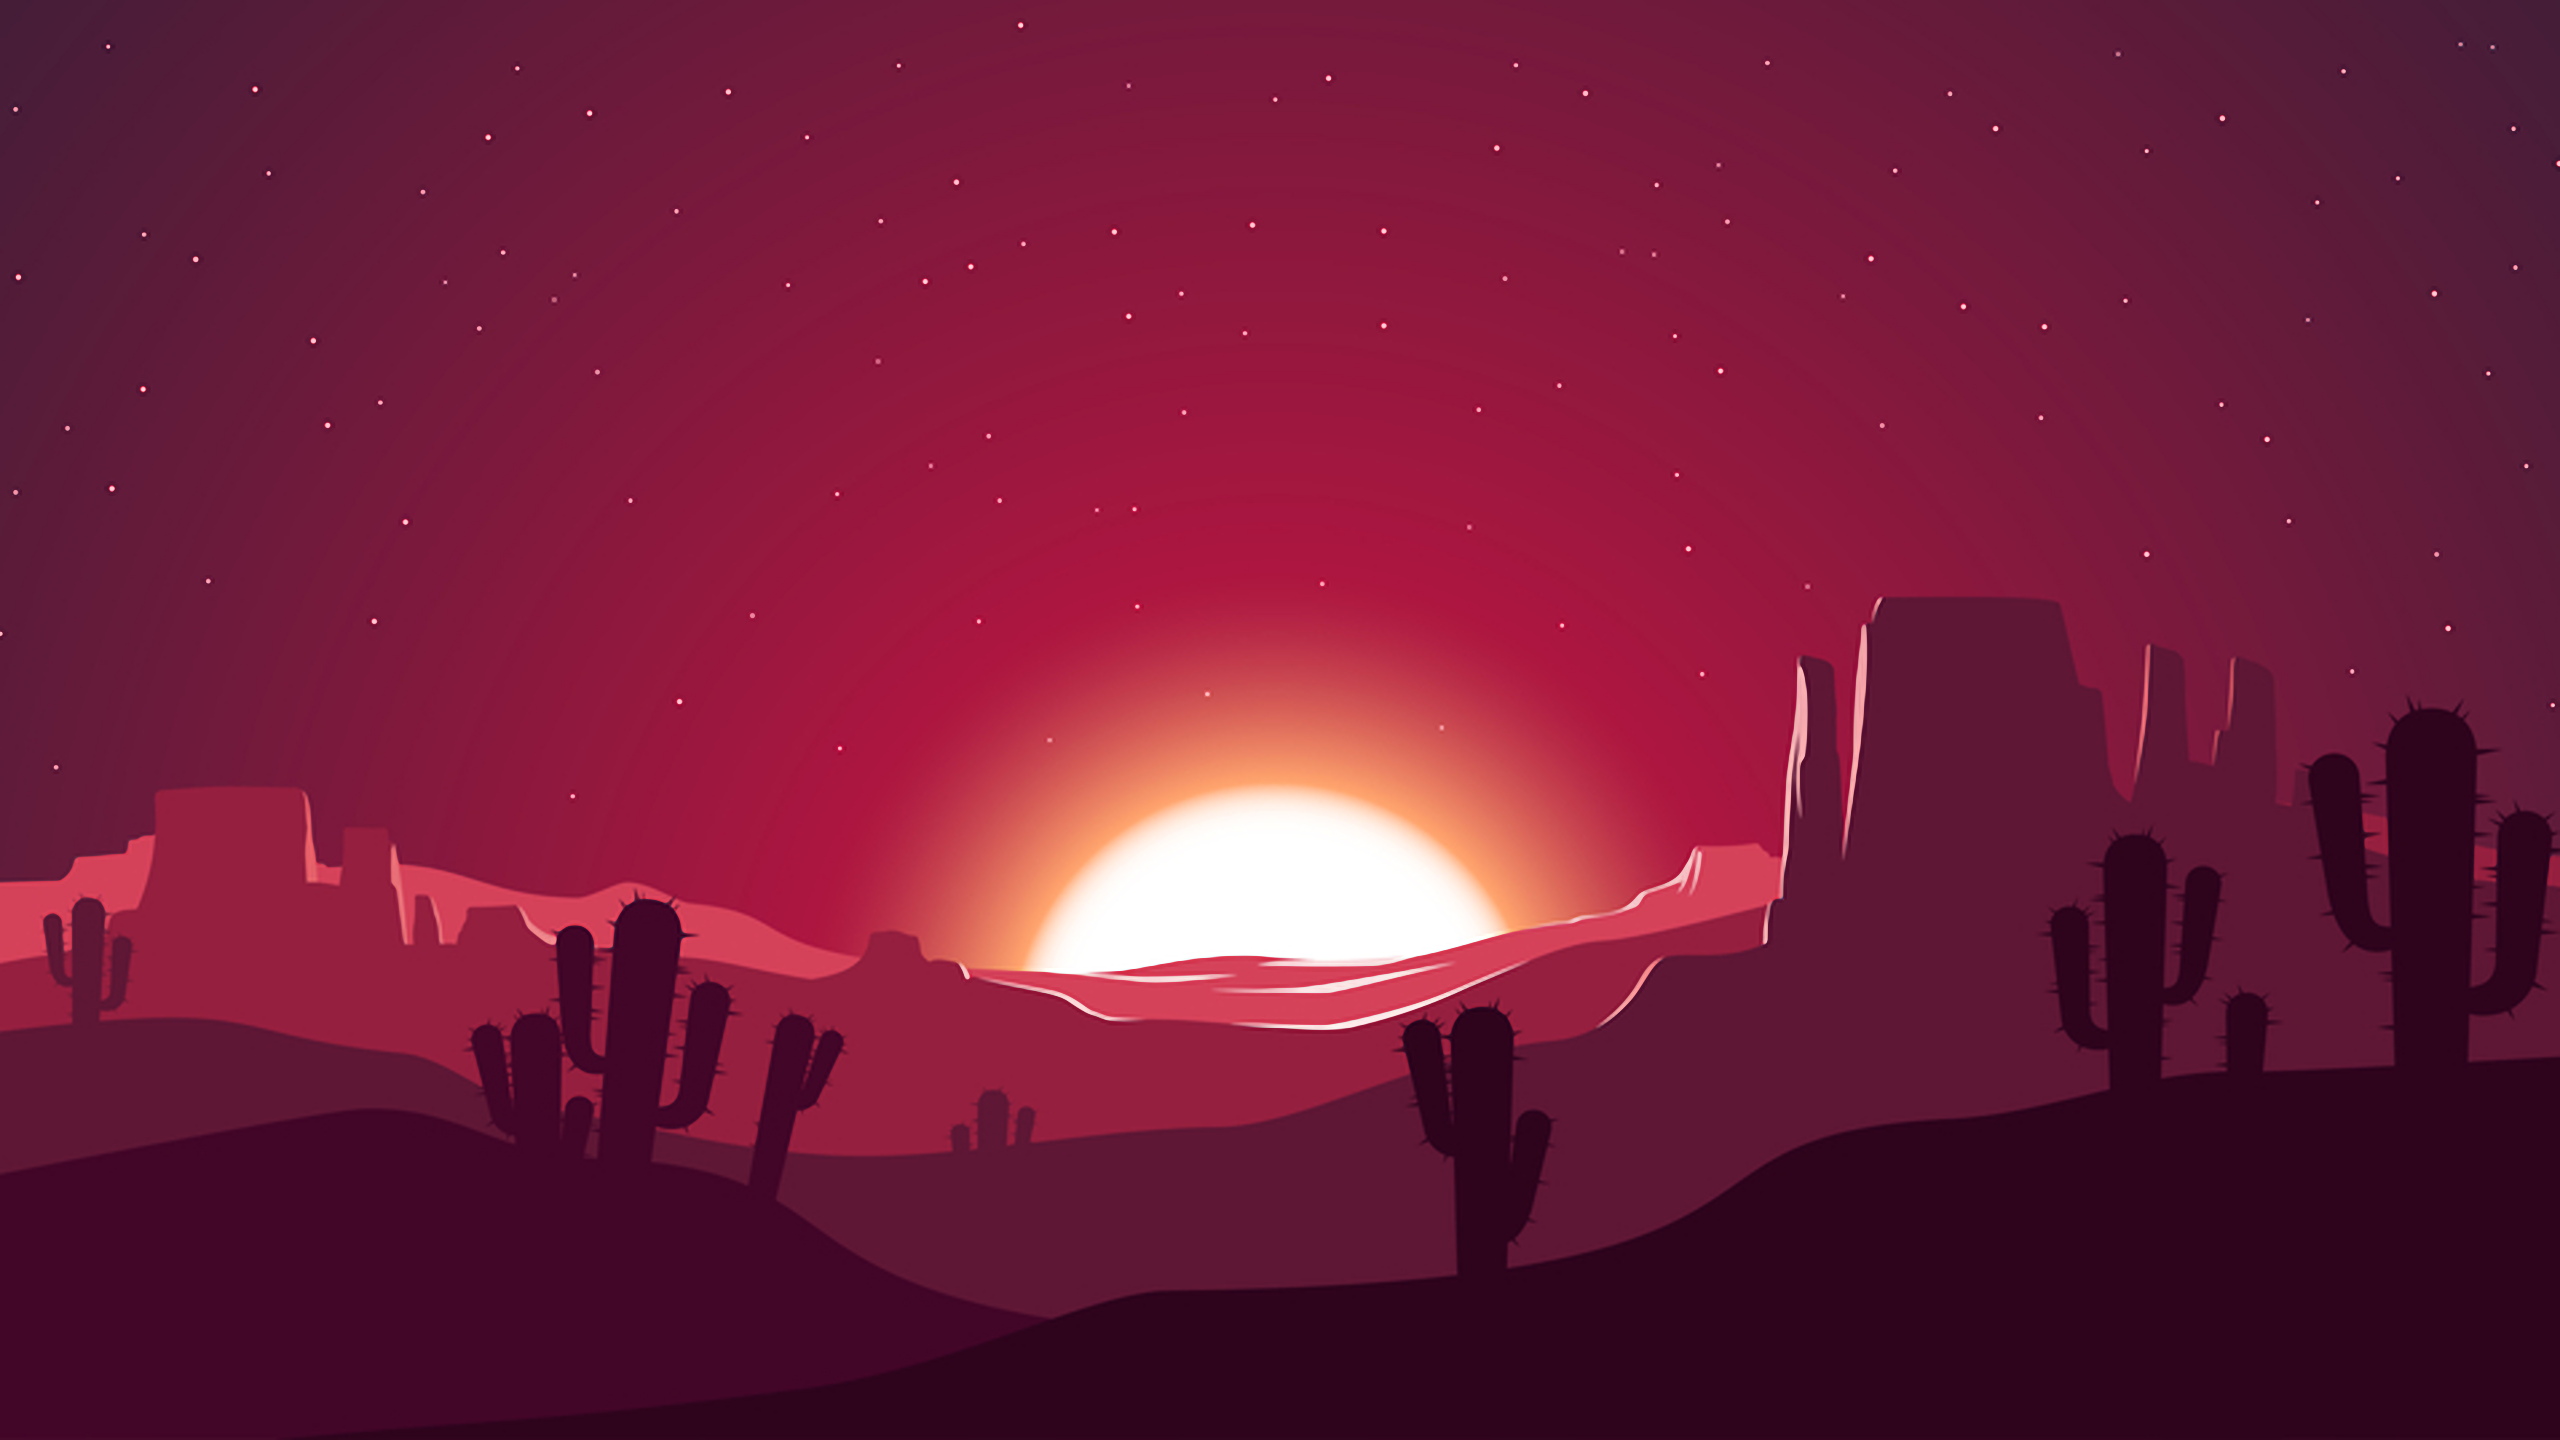 General 2560x1440 digital art artwork vector art vector landscape sky skyscape desert rocks mountains sand Sun sunset dusk evening cactus nature silhouette stars concept art